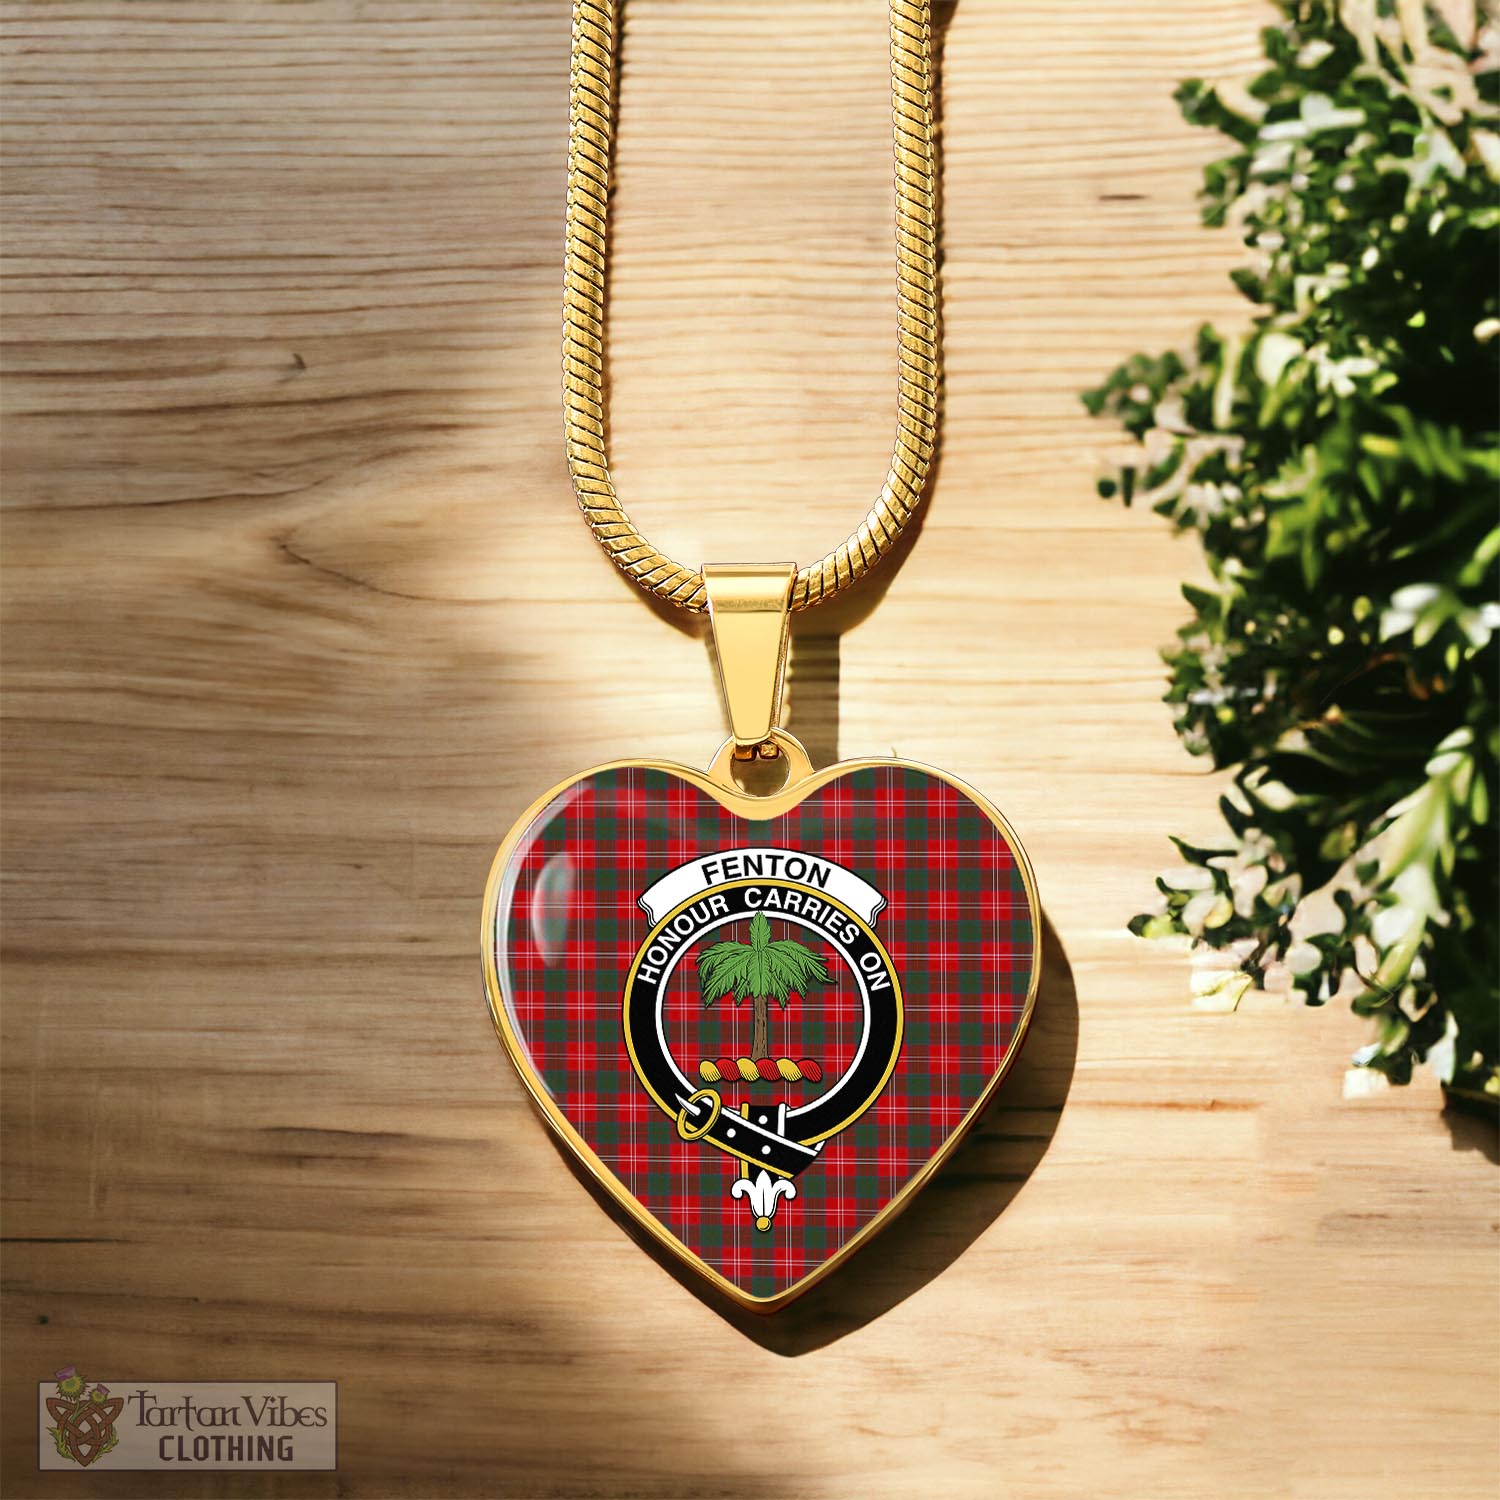 Tartan Vibes Clothing Fenton Tartan Heart Necklace with Family Crest